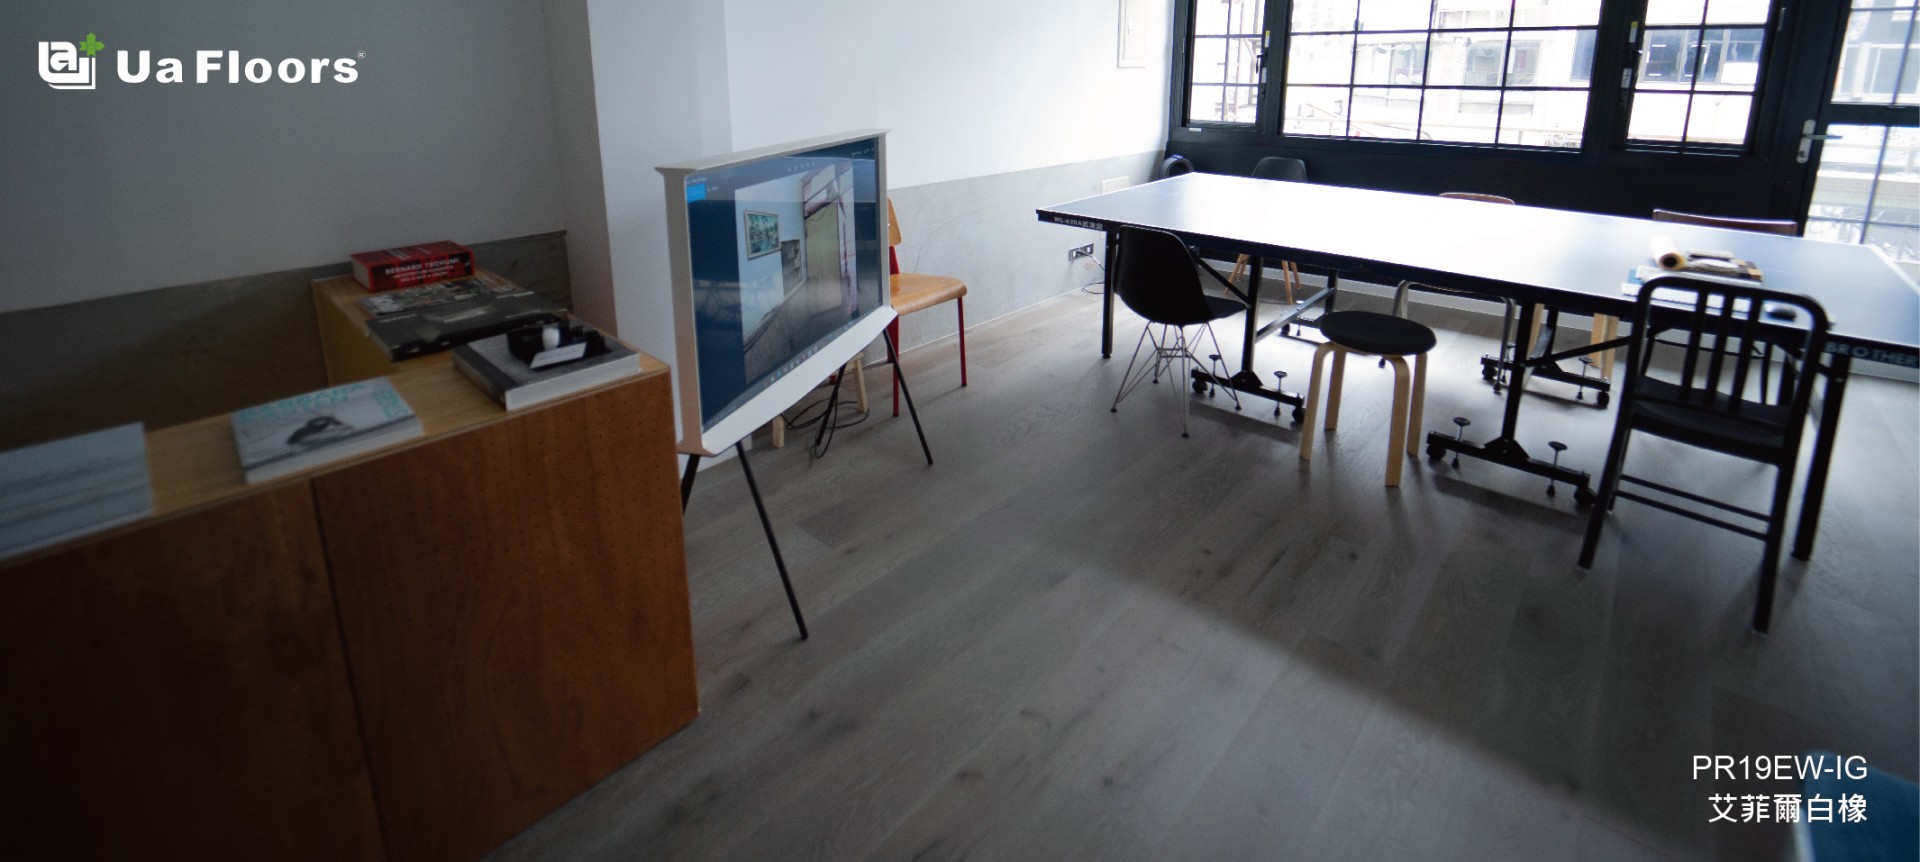 Ua Floors - 專案實績|台南-設計工作室